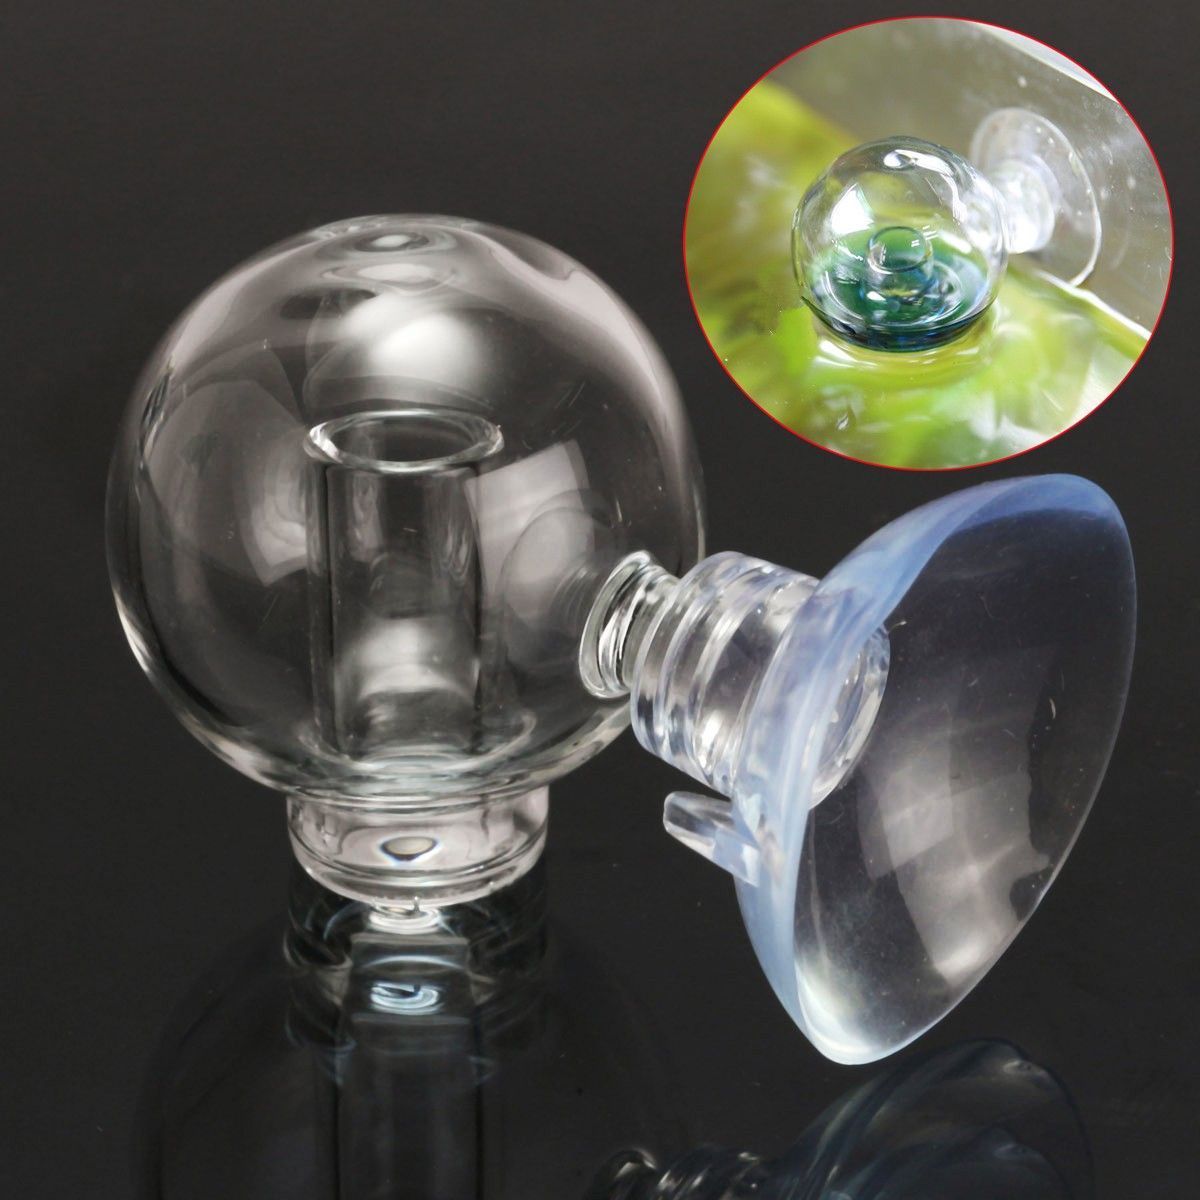 Aquarium-Carbon-Dioxide-CO2-Monitor-PH-Indicator-Glass-Drop-Ball-Checker-Tester-1060459